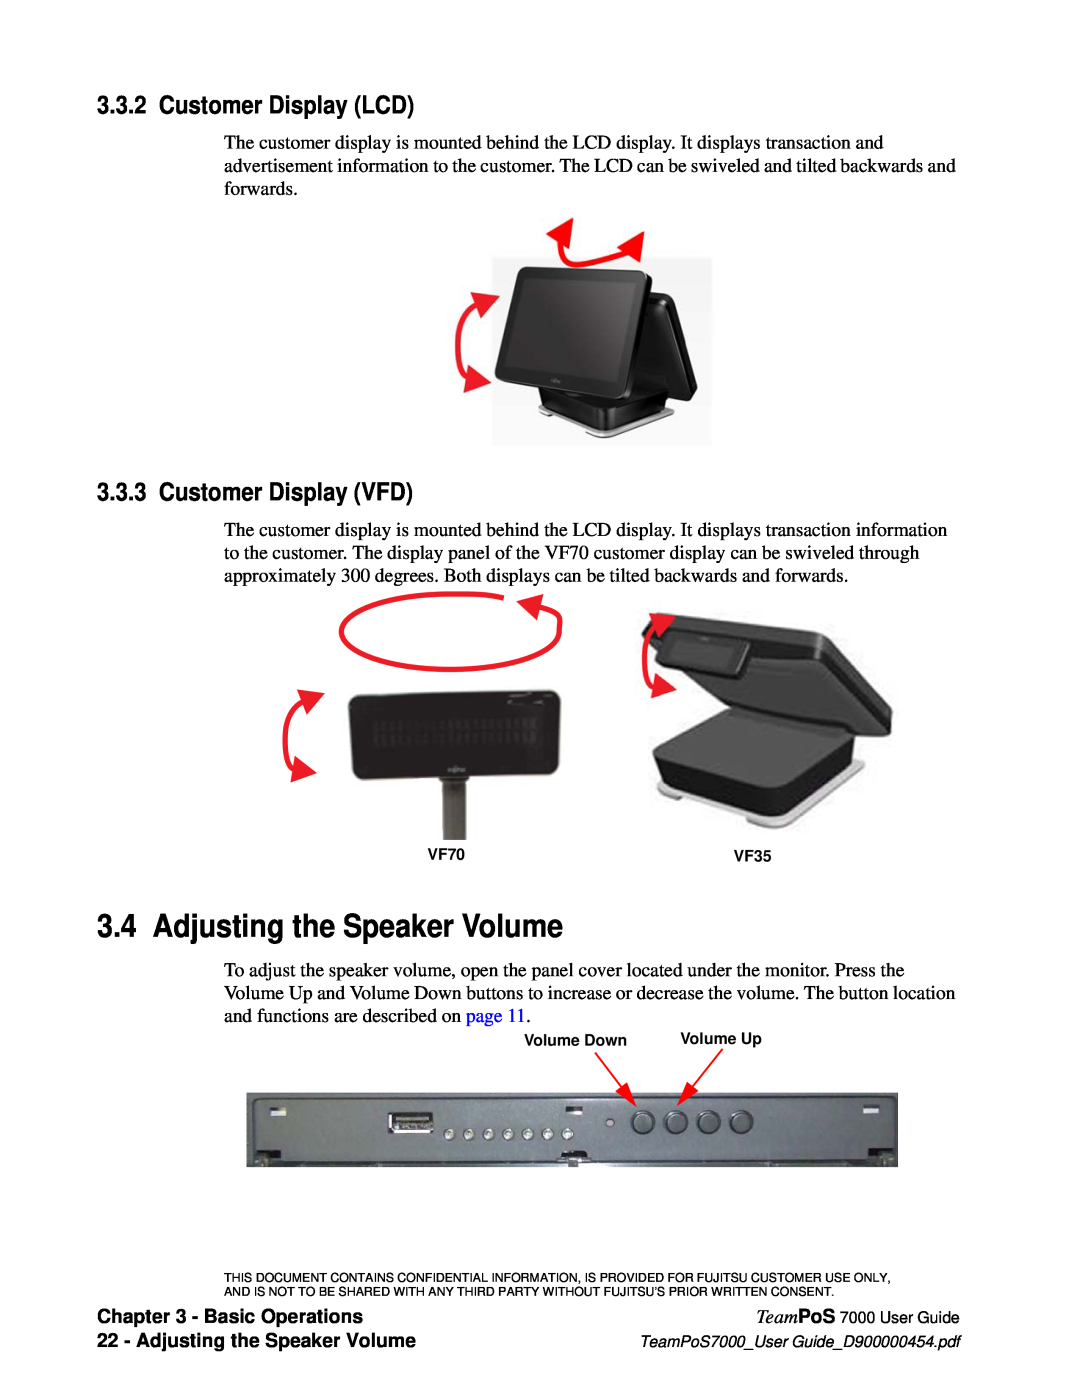 Fujitsu 7000 manual Adjusting the Speaker Volume, Customer Display LCD, Customer Display VFD, Basic Operations 